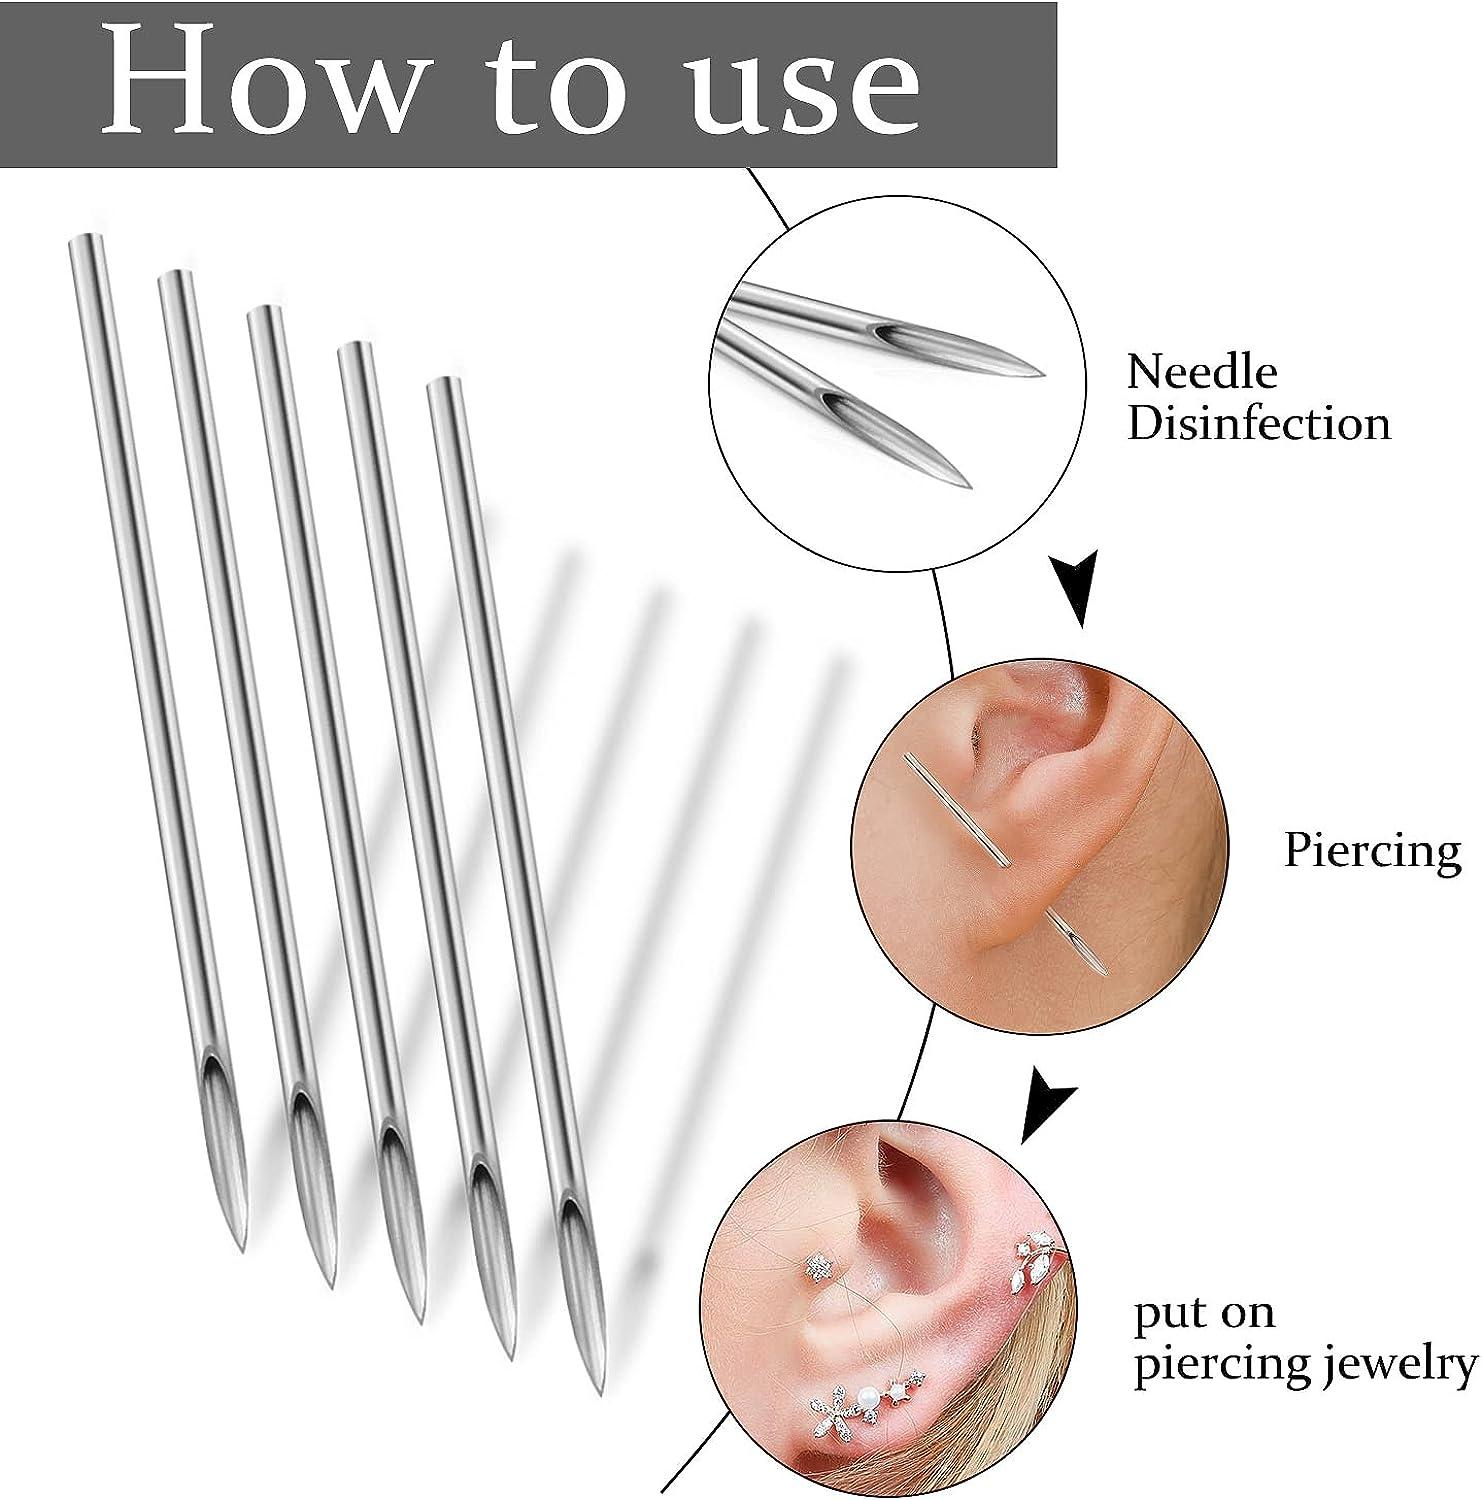 Sterile piercing needle